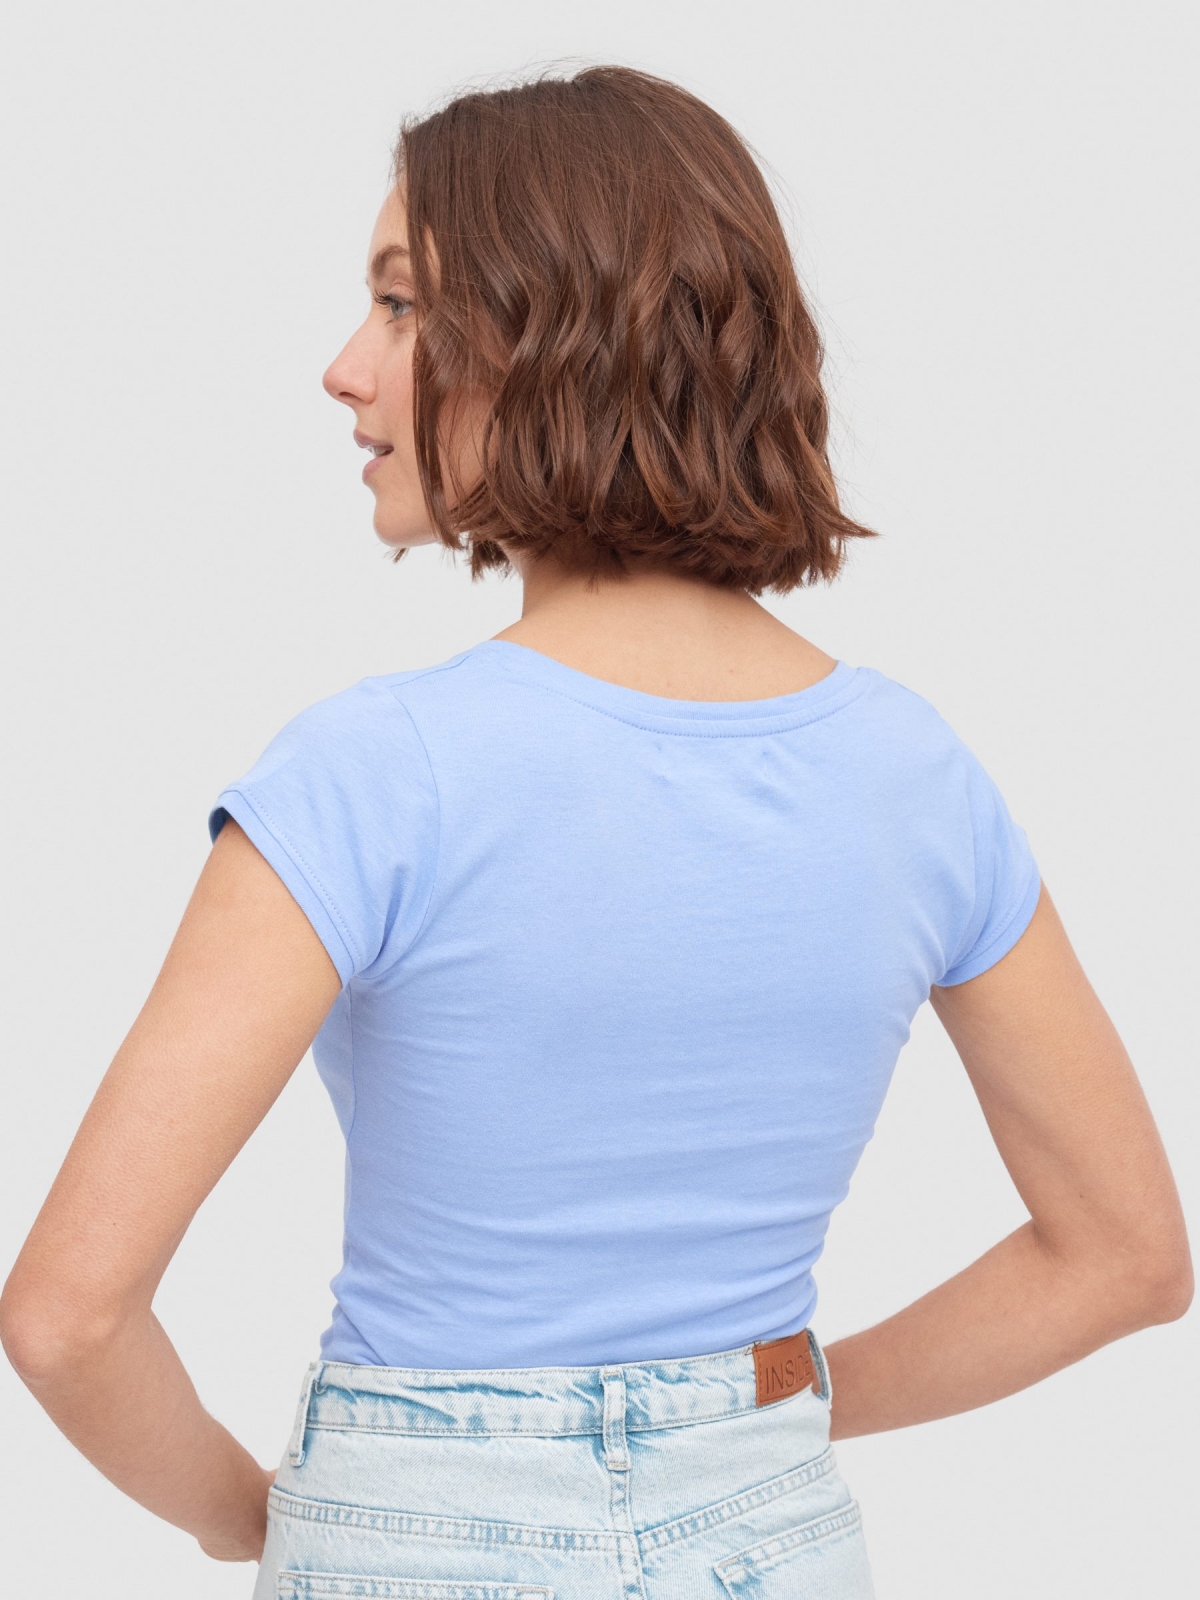 Kawaii T-shirt blue middle back view